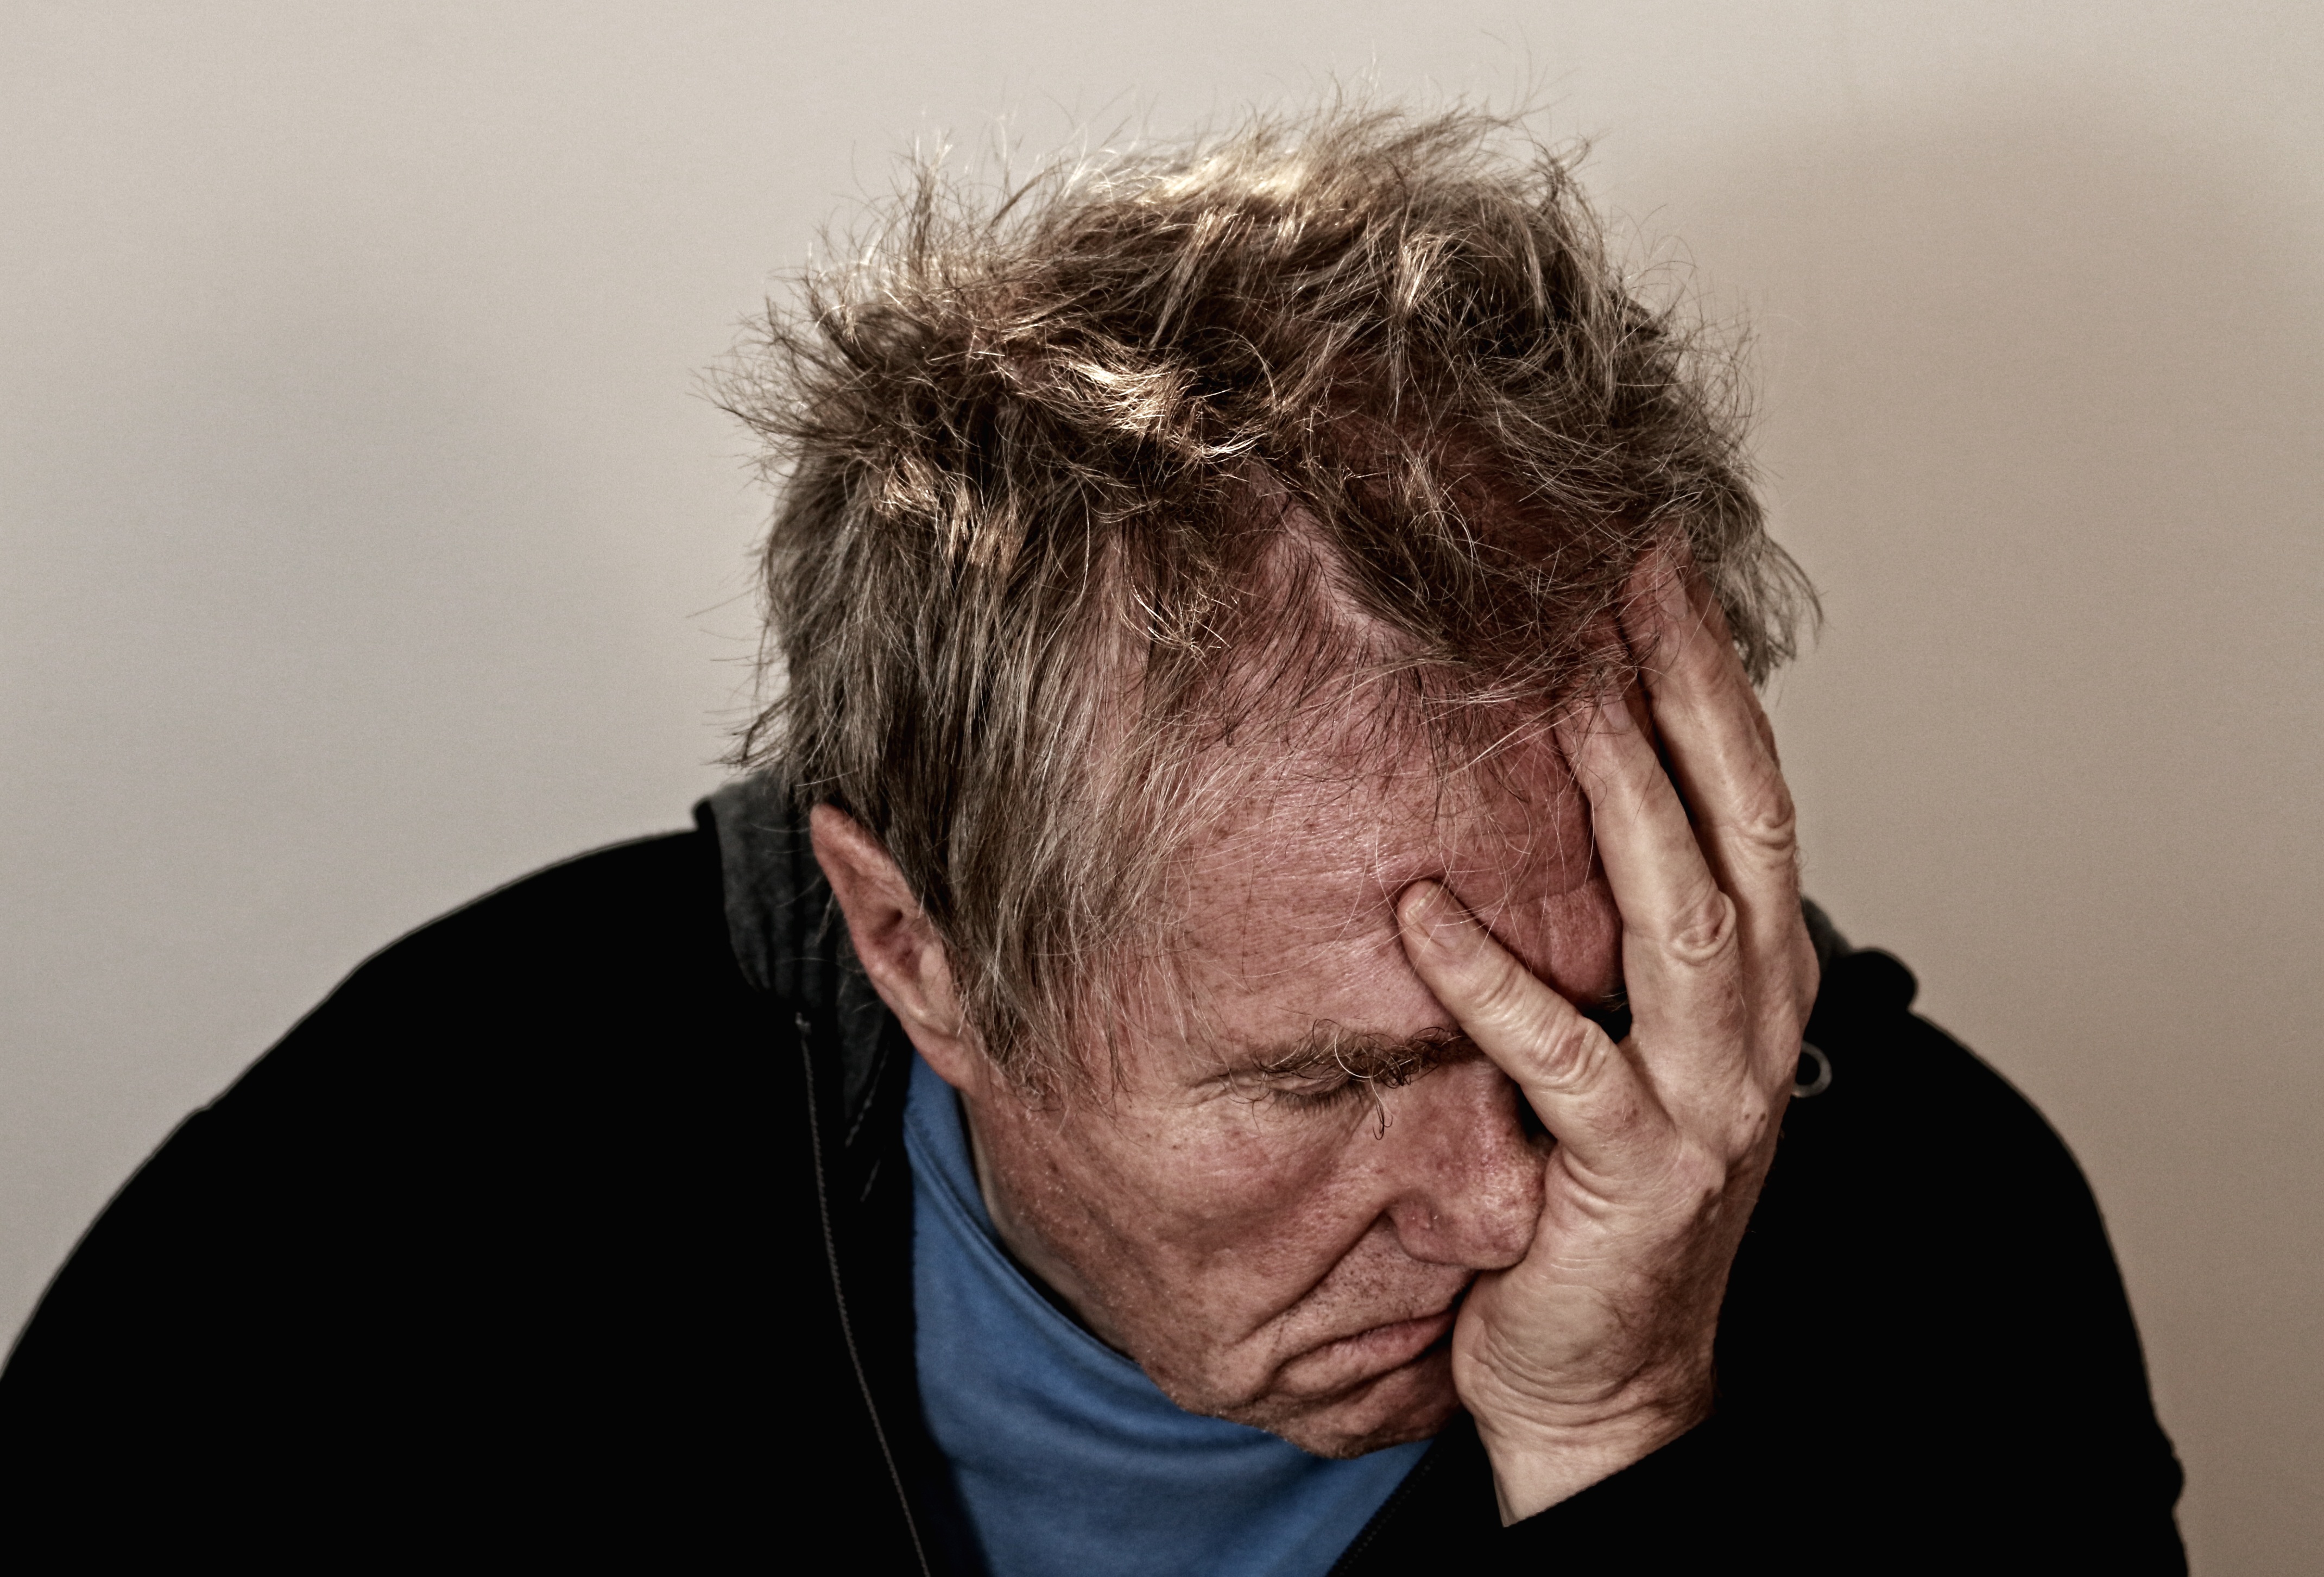 man-old-depressed-headache-23180